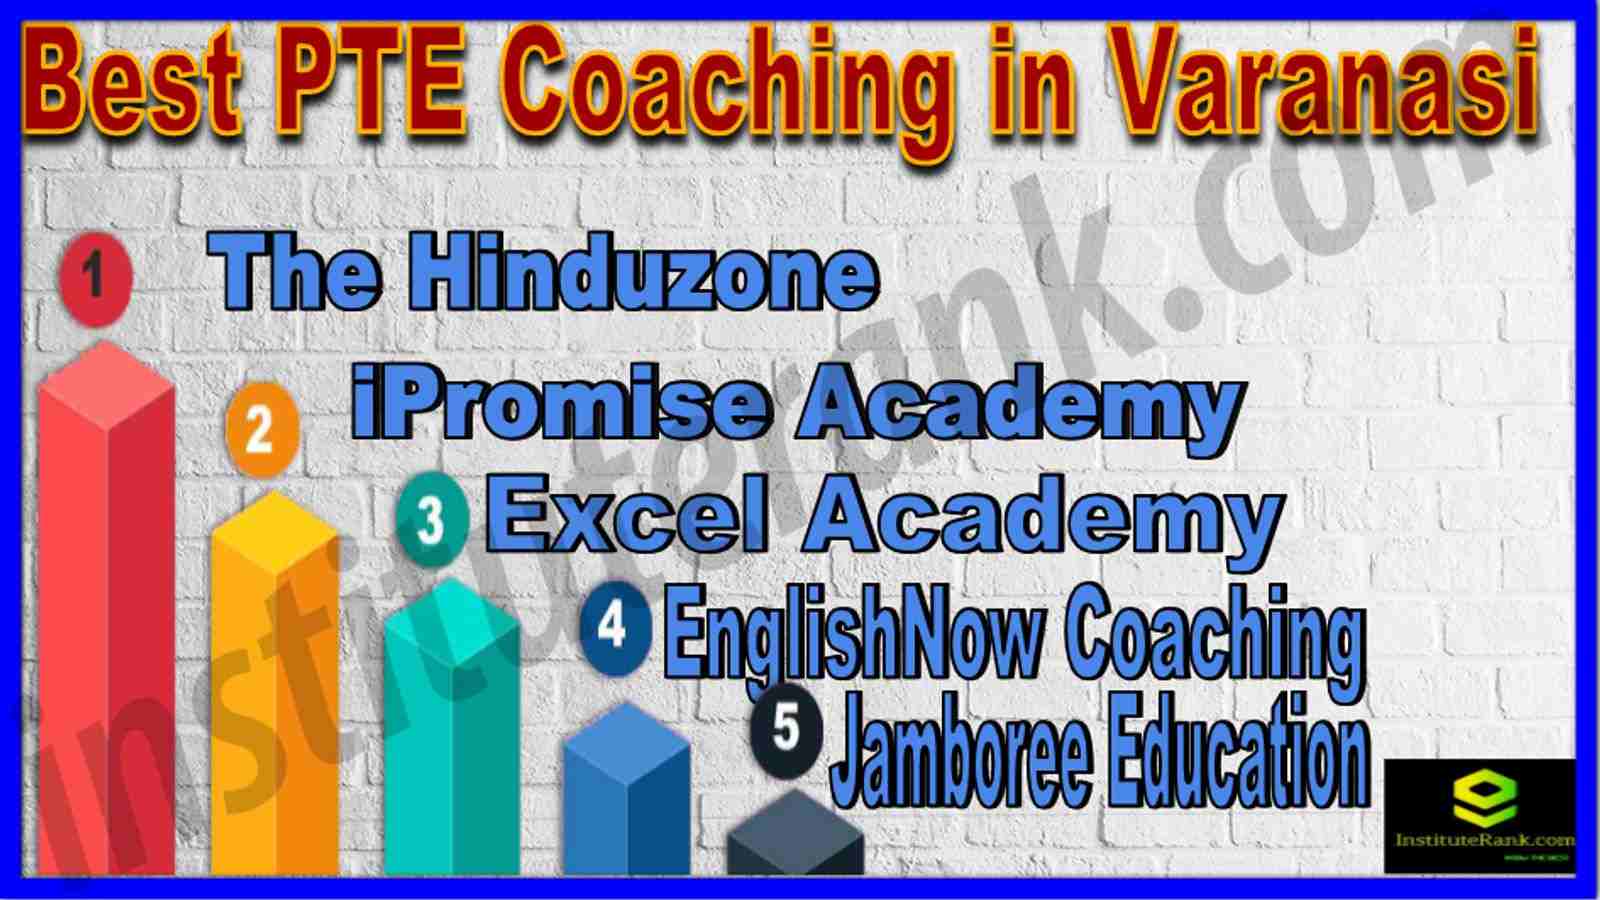 Best PTE Coaching In Varanasi